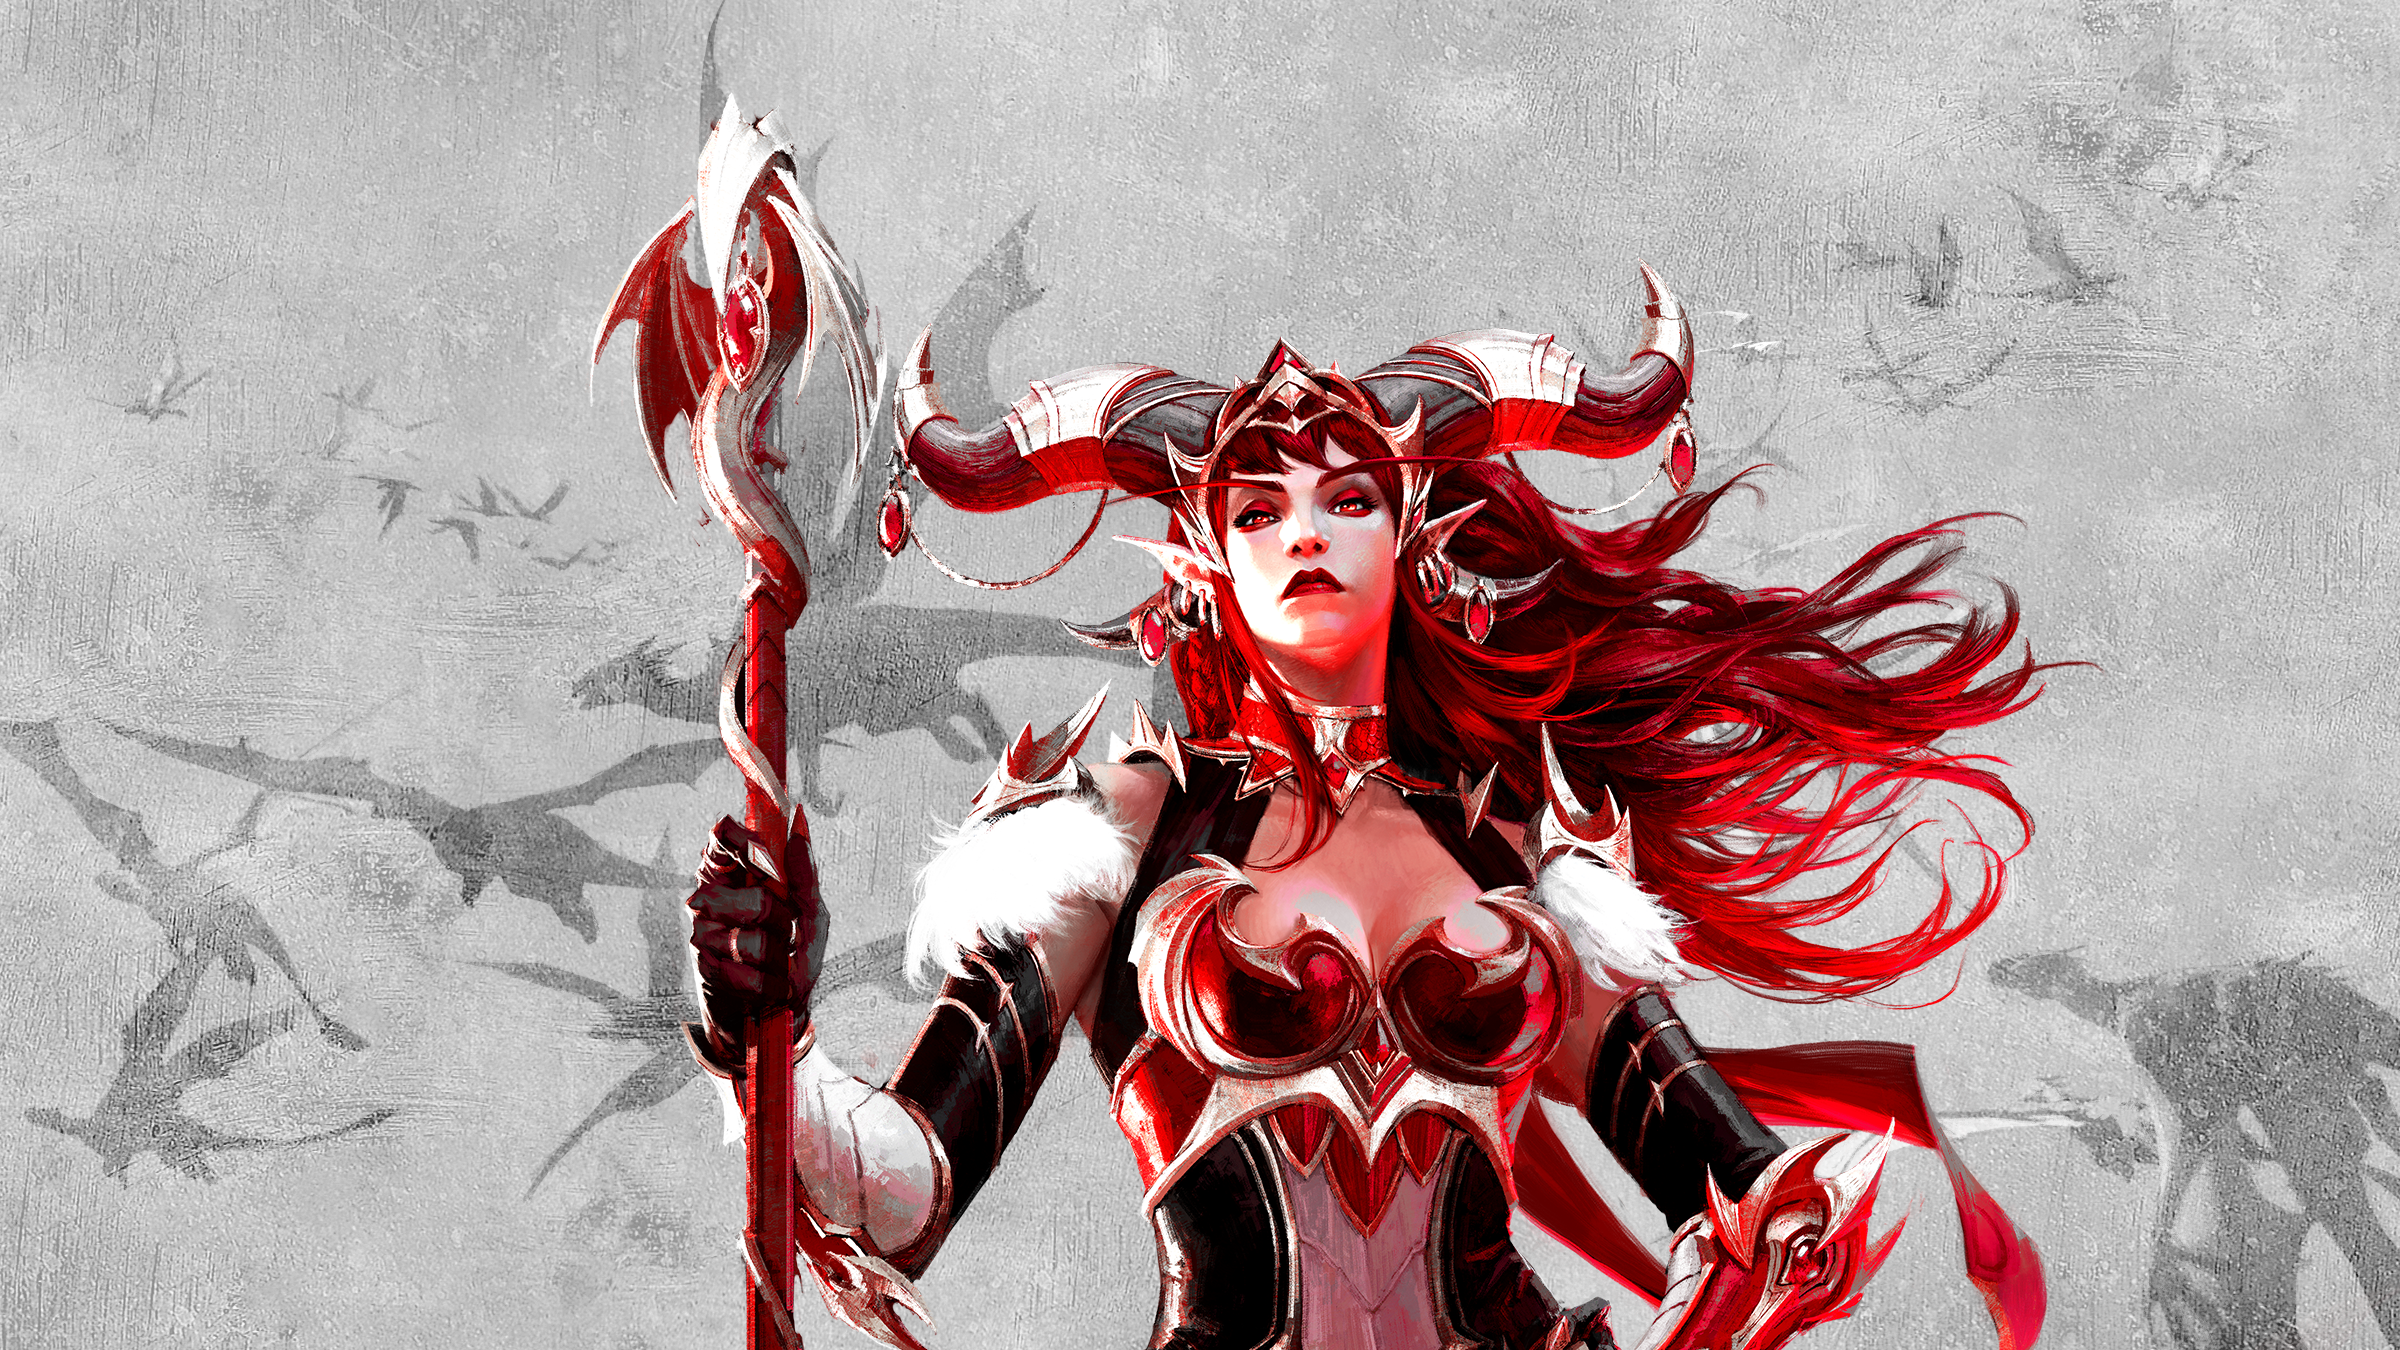 Anime 2400x1350 Alexstrasza World of Warcraft fantasy art redhead red eyes pointy ears horns dragon